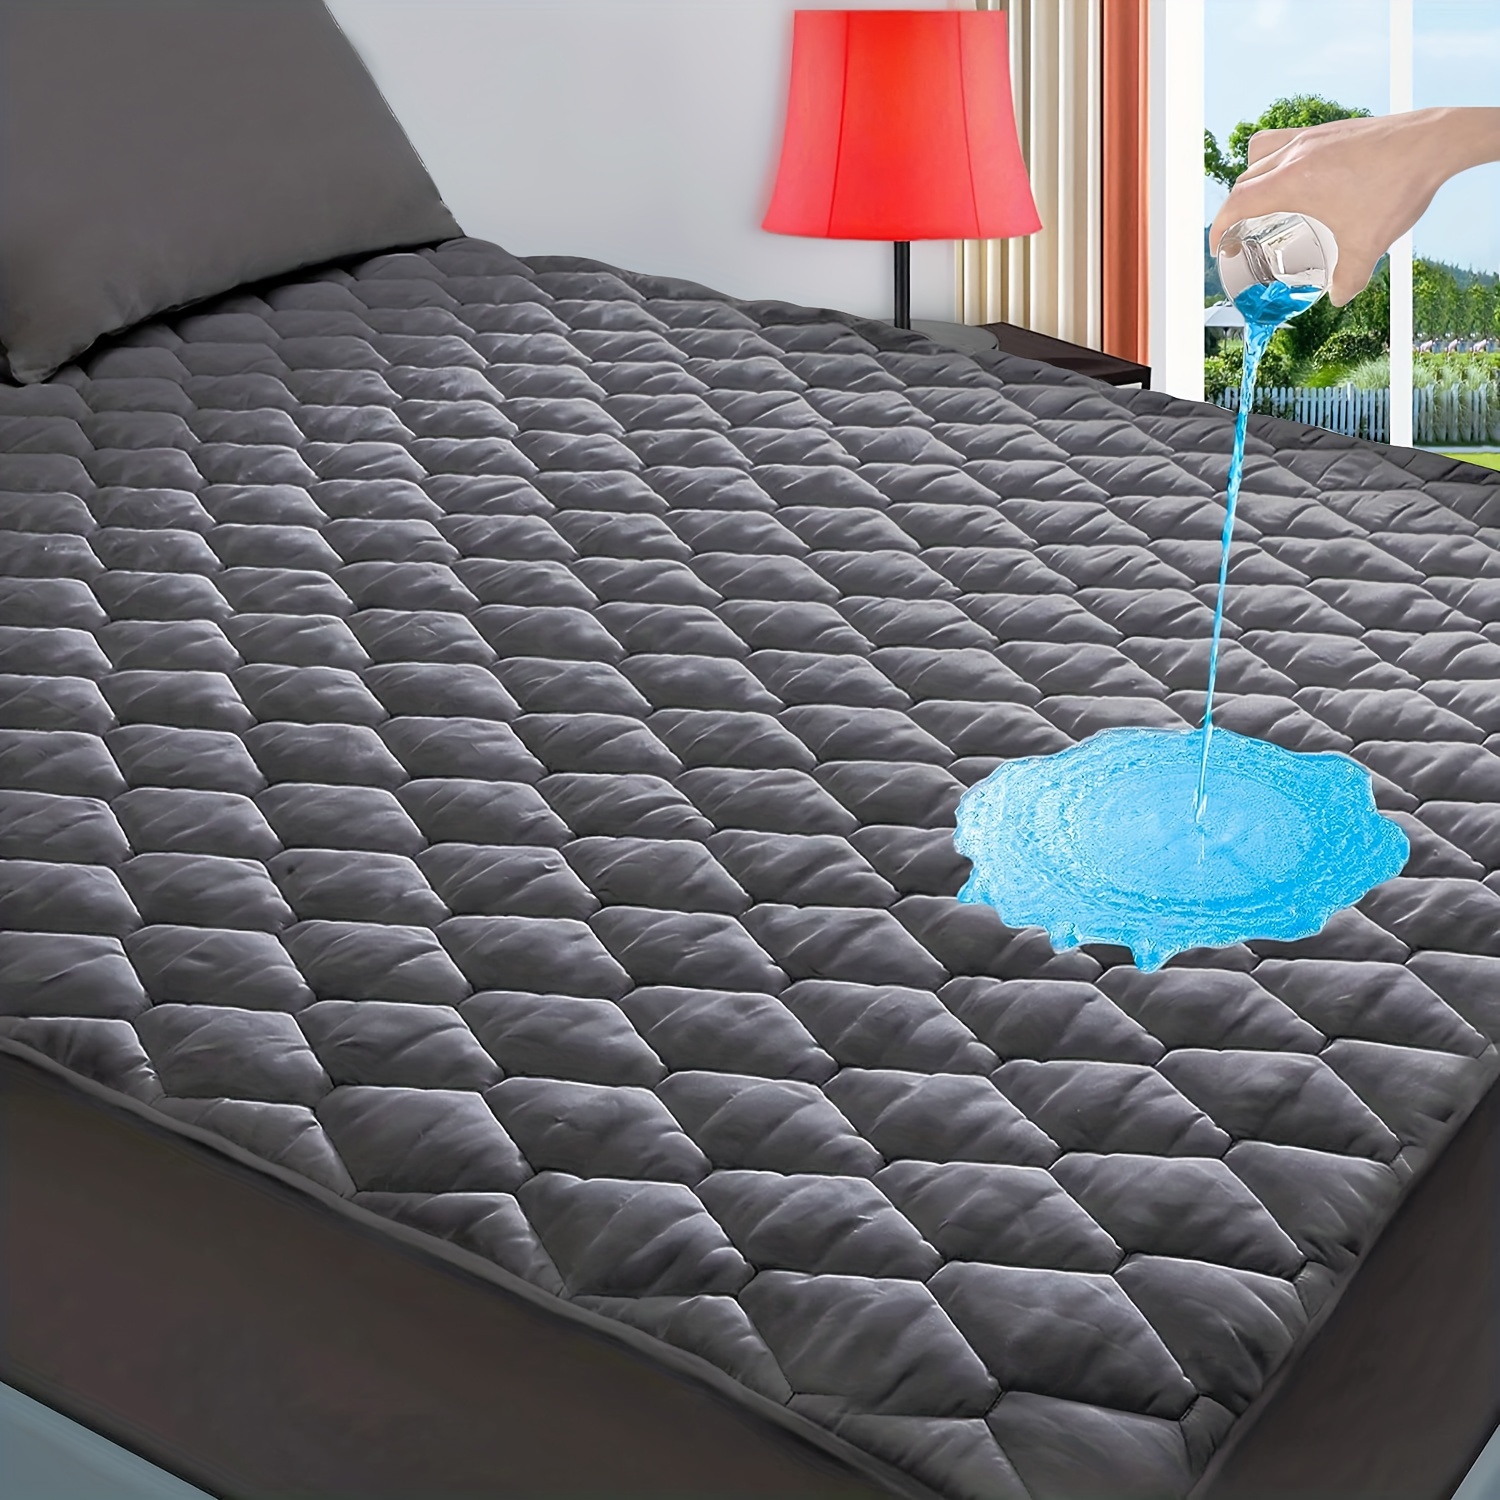 Protector de colchón, funda de colchón, cubierta de colchón de plástico  suave impermeable, color blanco, tamaño: (tamaño queen)